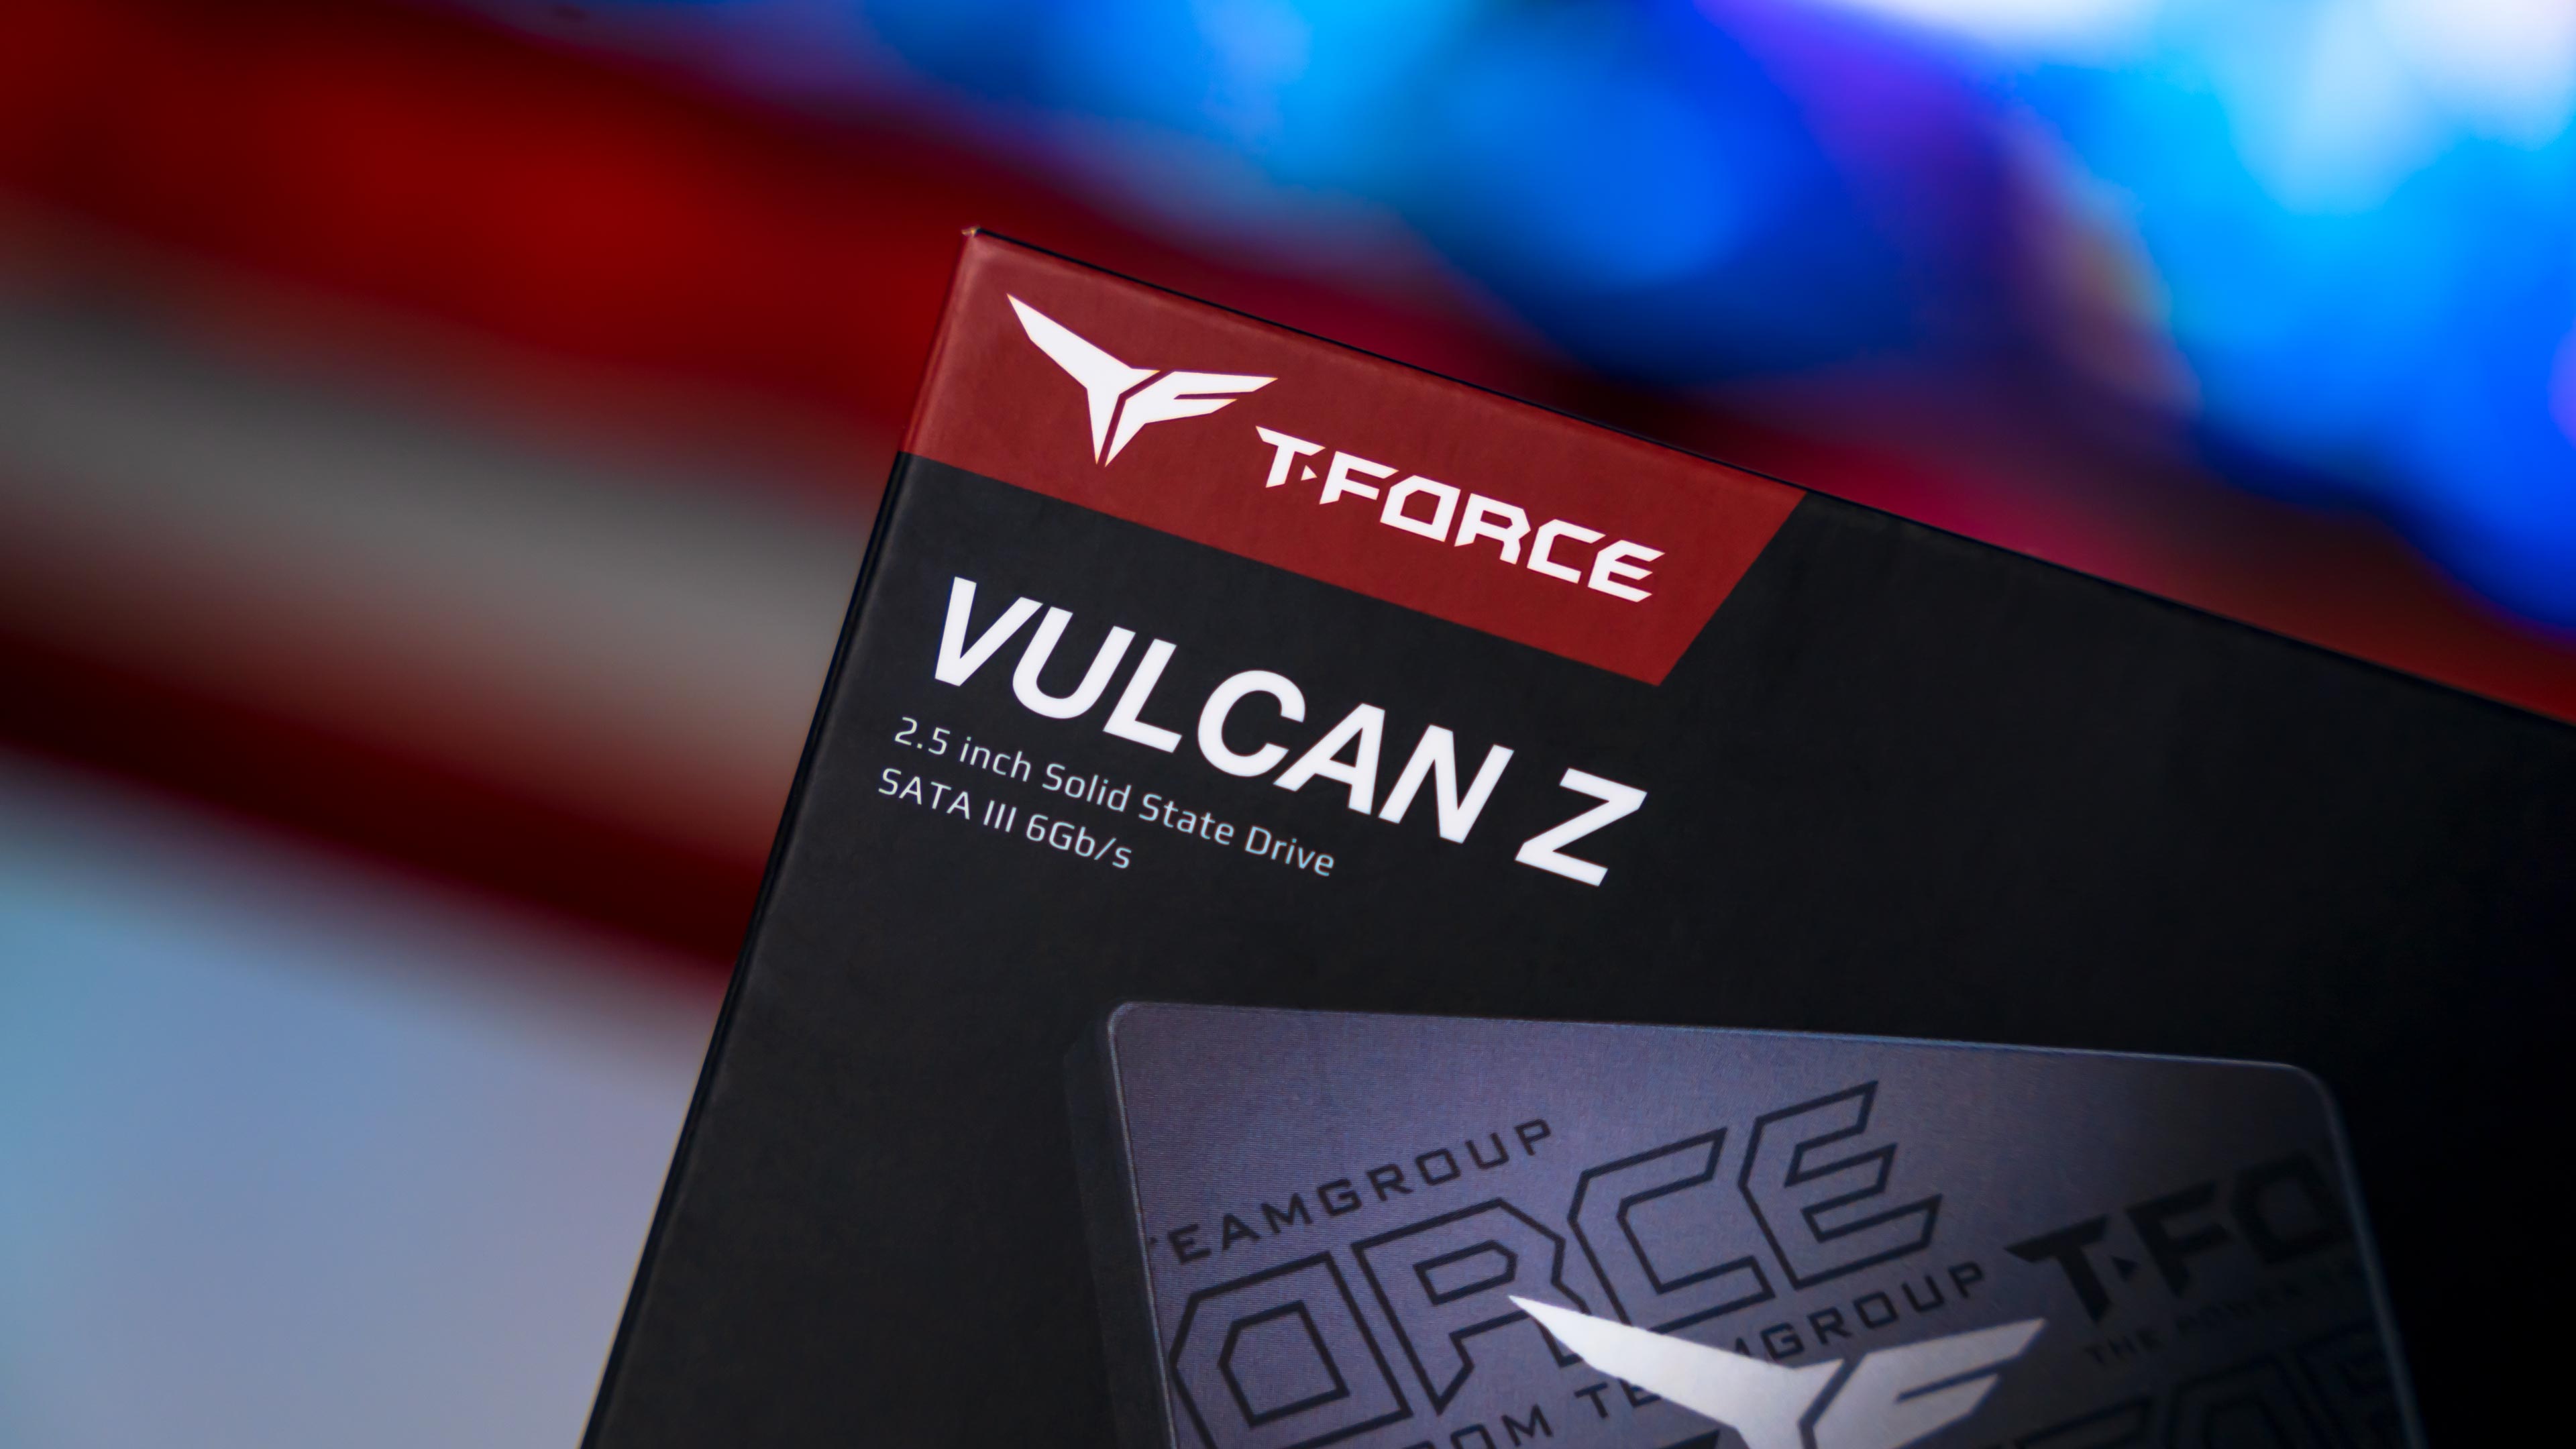 TeamGroup T-Force Vulcan Z SSD 1TB Box (2)